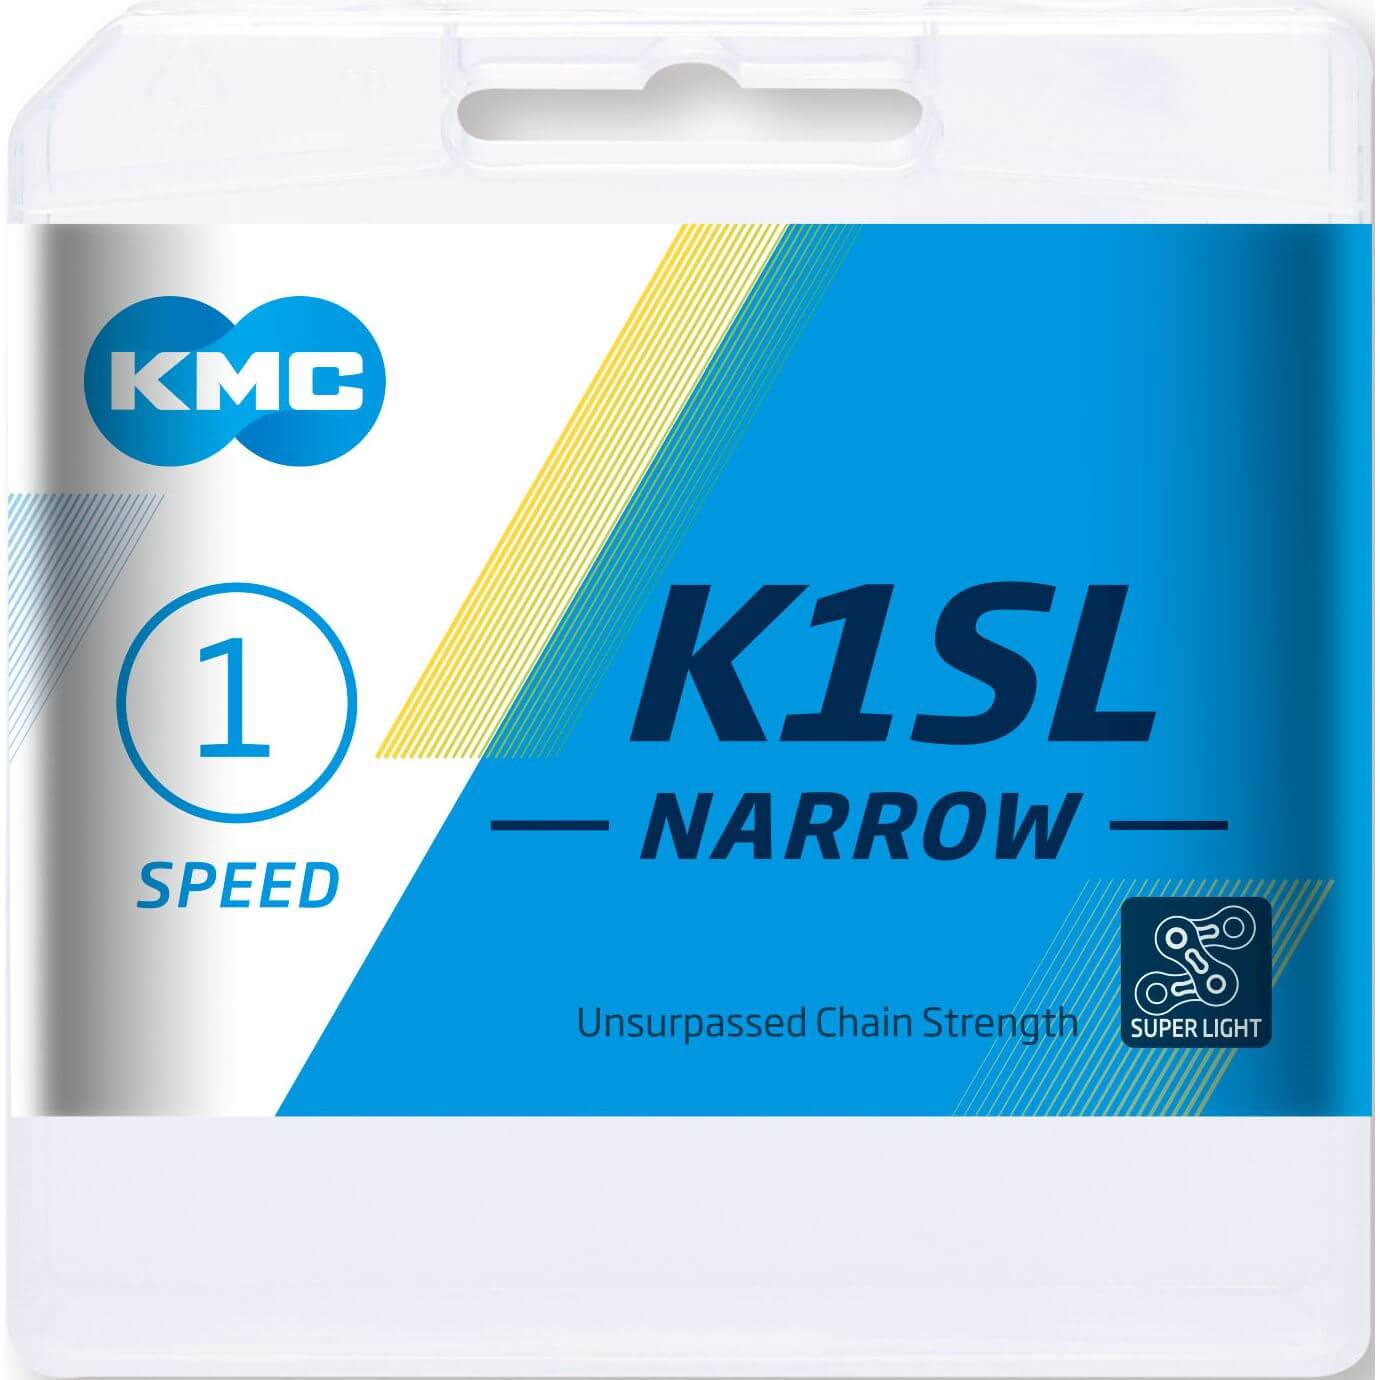 KMC ketting K1SL 3 32 narrow silver 100s